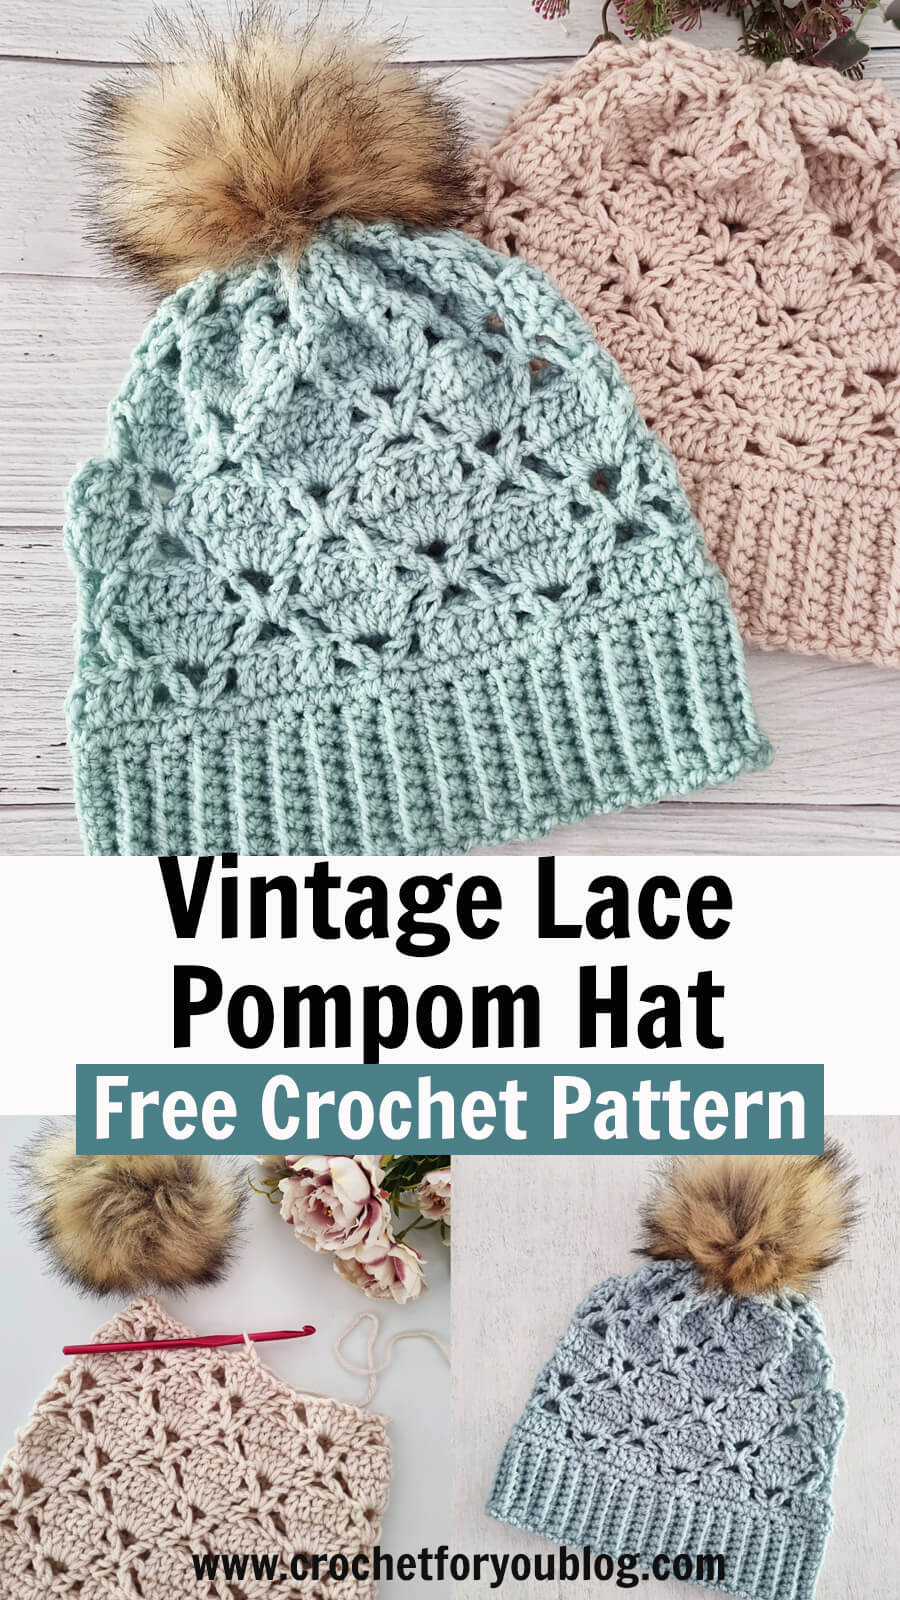 Vintage lace pompom hat